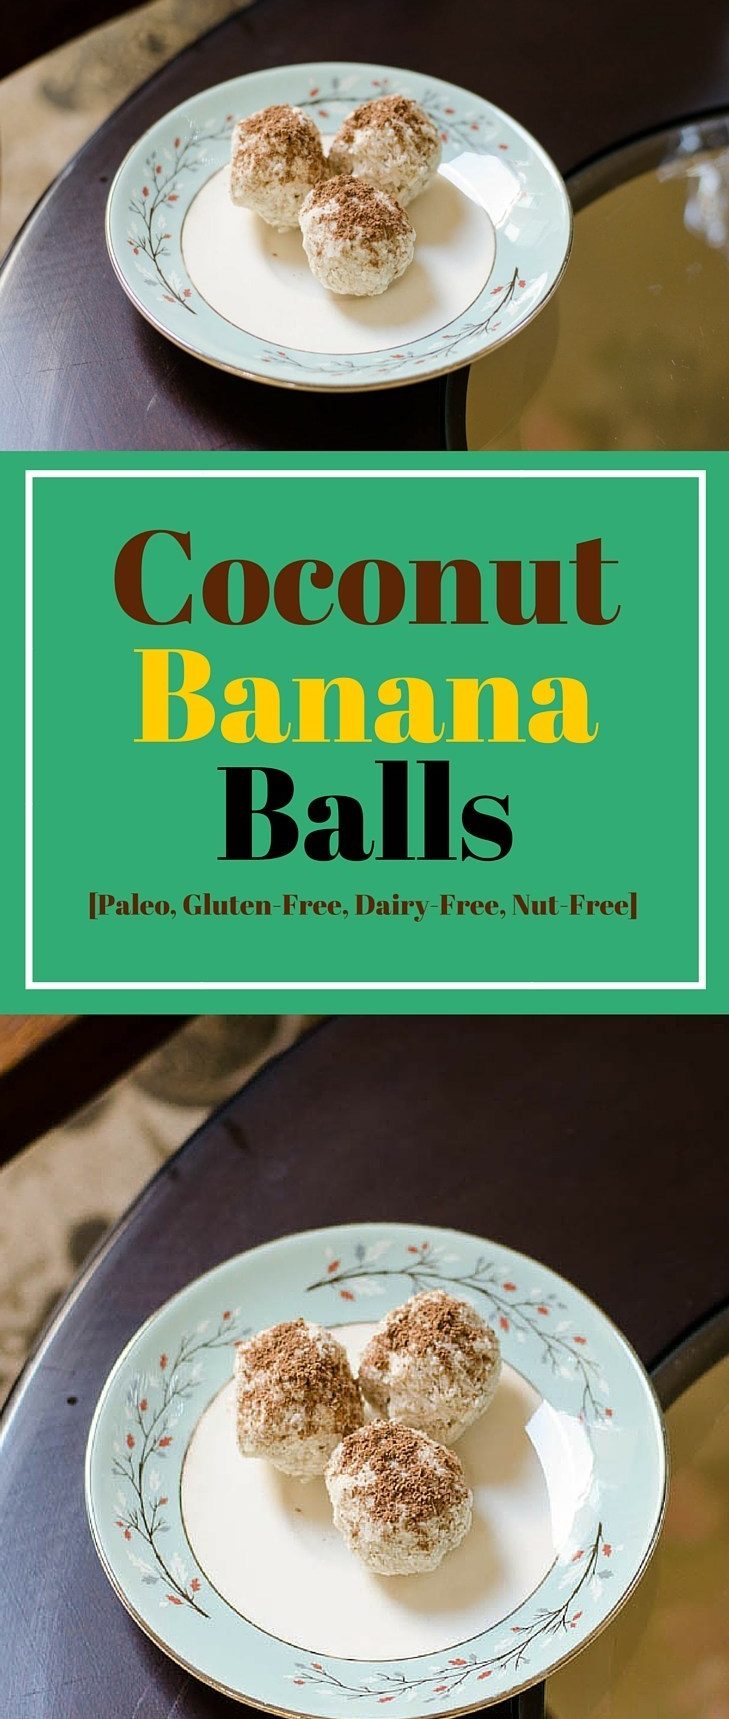 Coconut Banana Balls Recipe [Paleo, Gluten-Free, Dairy-Free, Nut-Free] #paleo #recipes #glutenfree https://paleoflourish.com/coconut-banana-balls-recipe-paleo-gf-dairyfree-nutfree